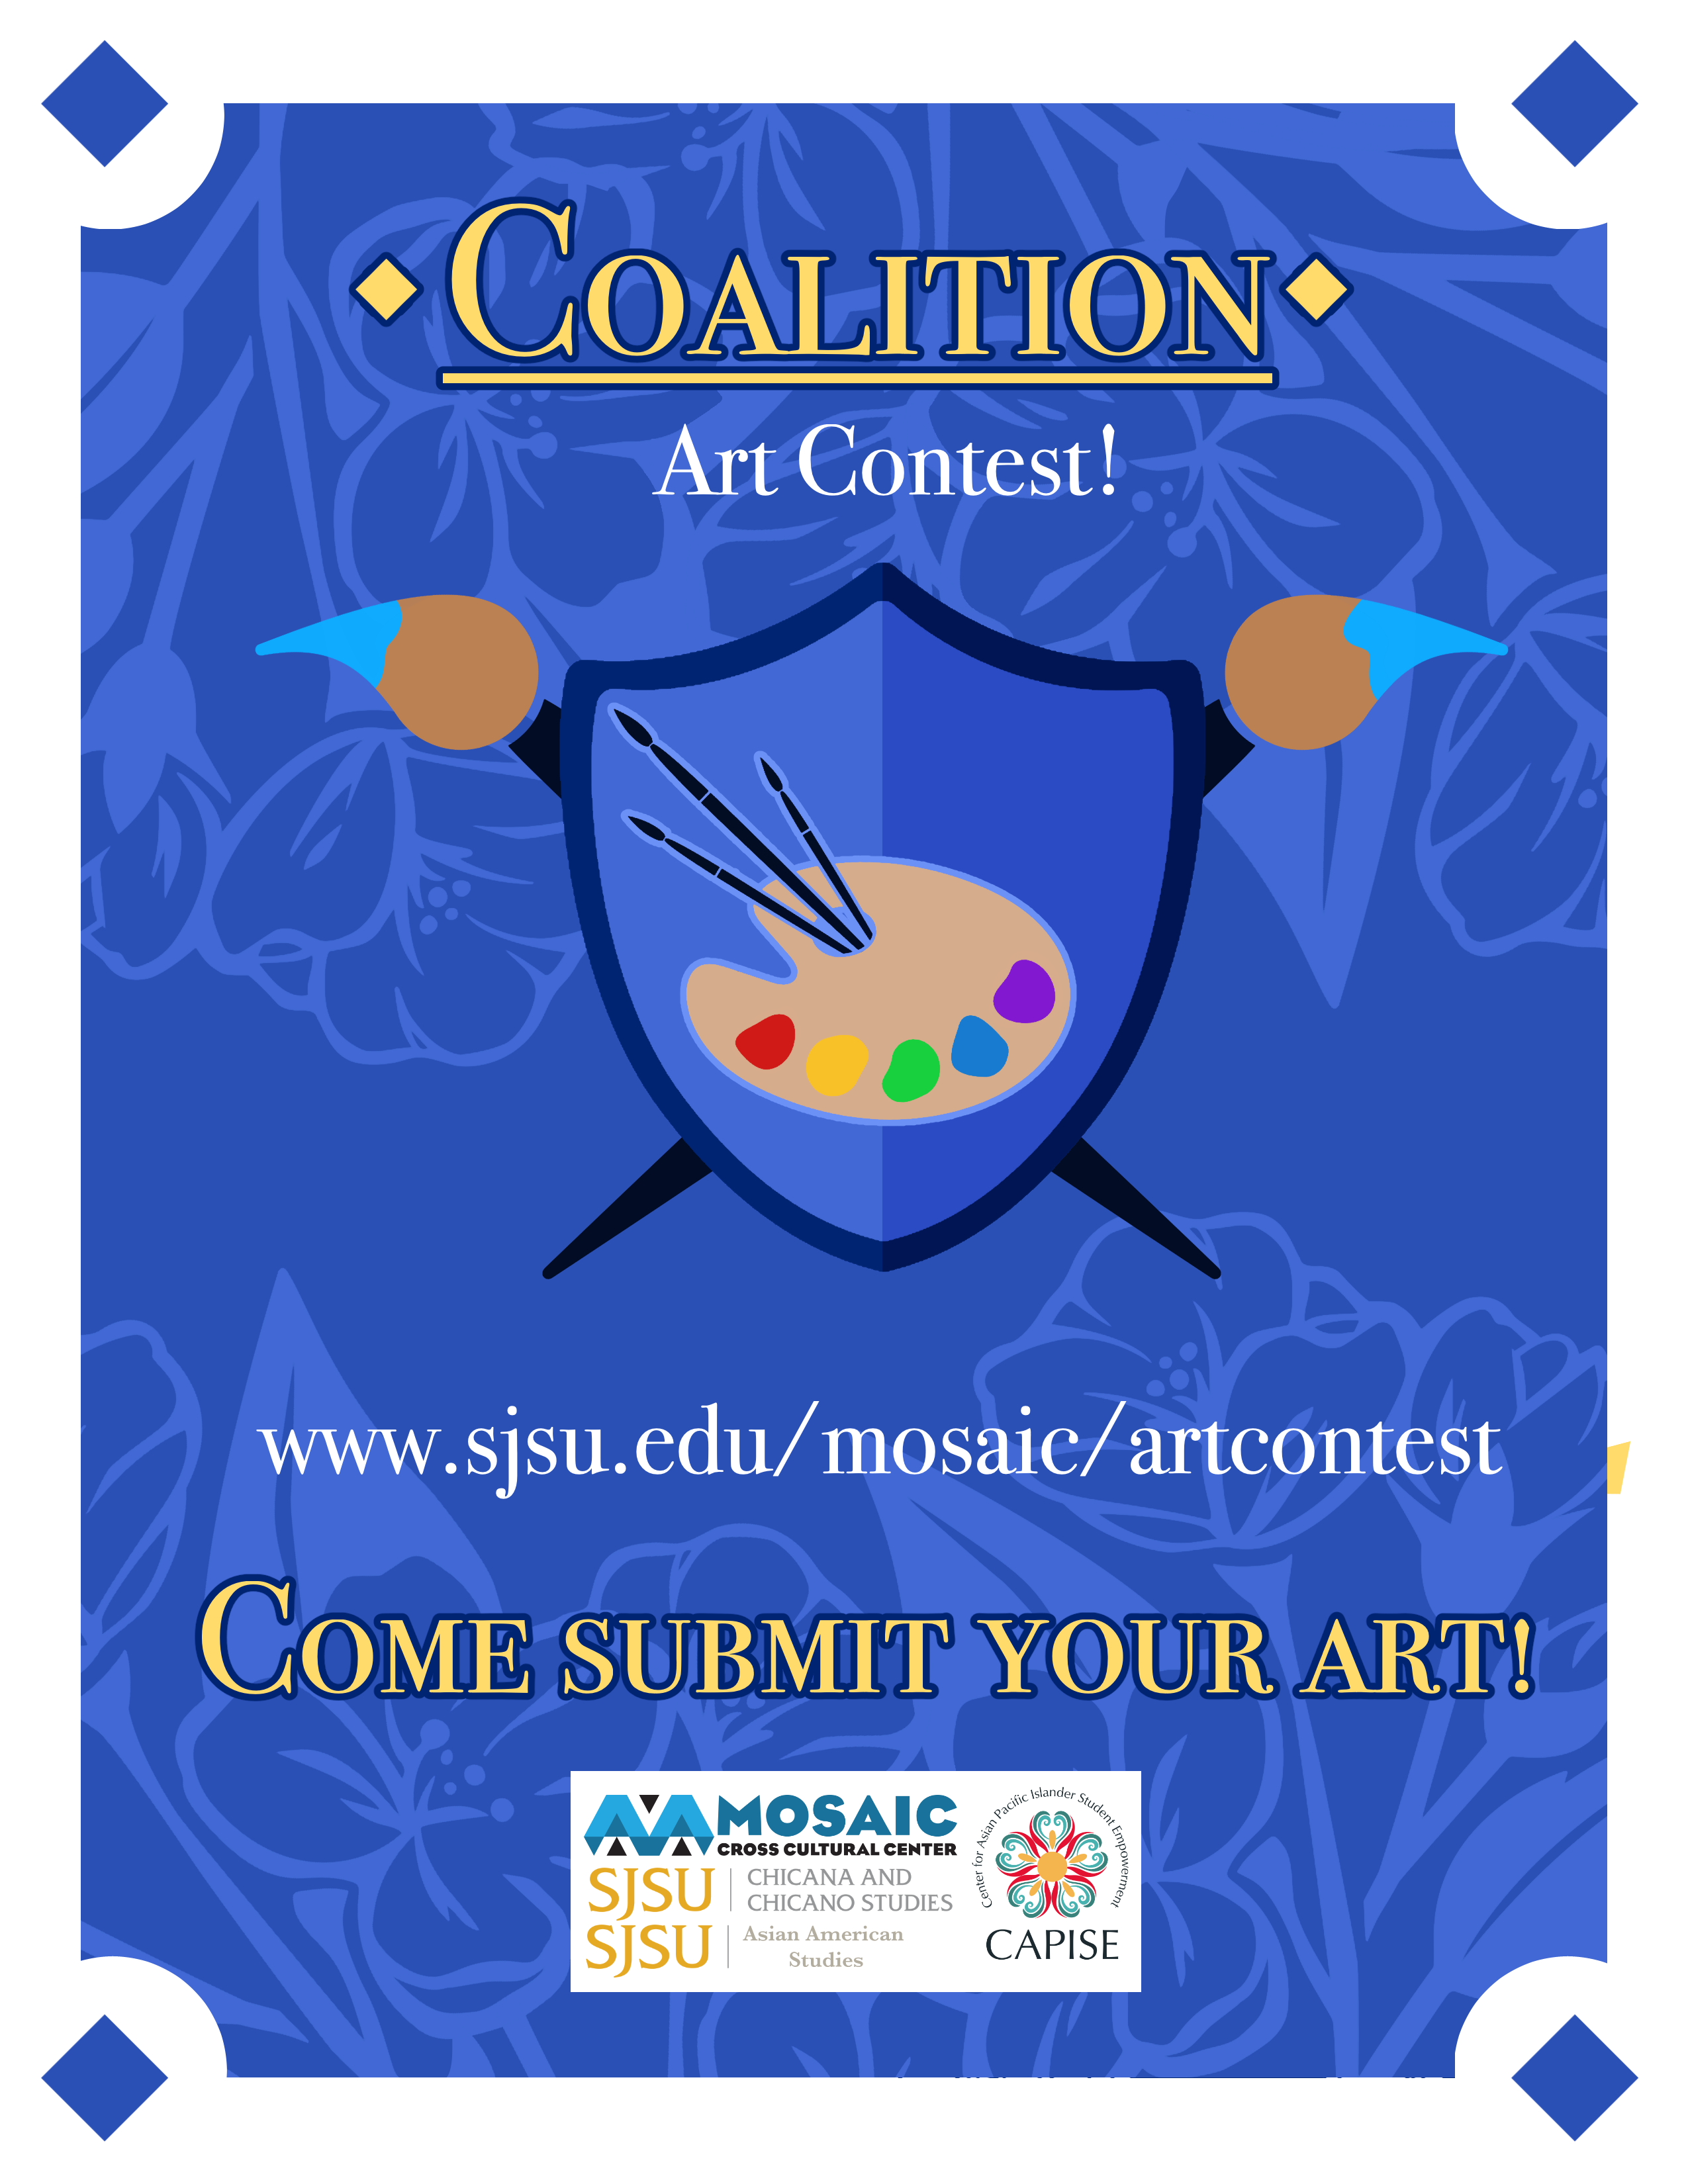 Art Contest flyer